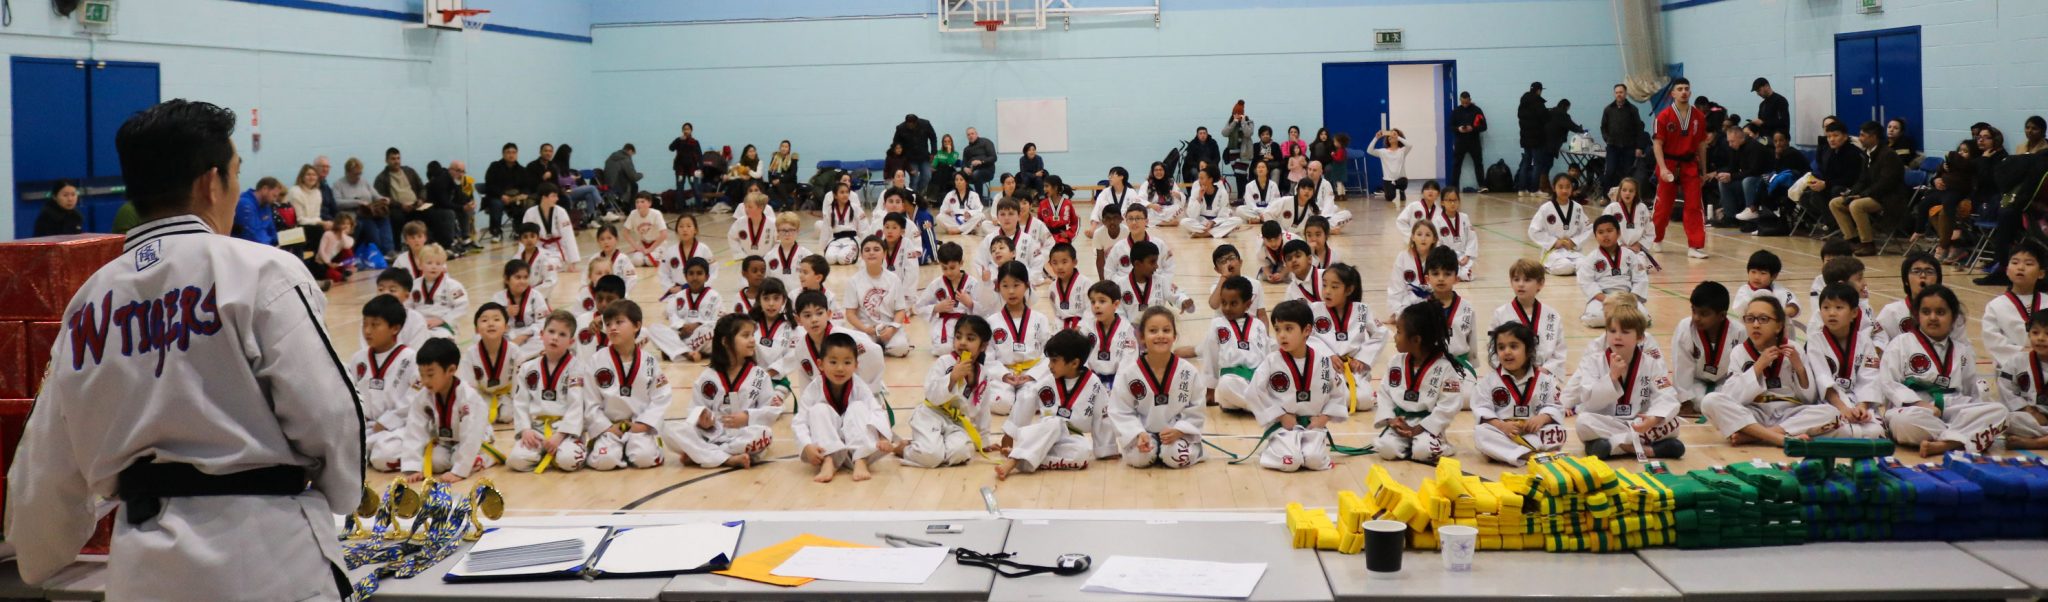 Taekwondo School London